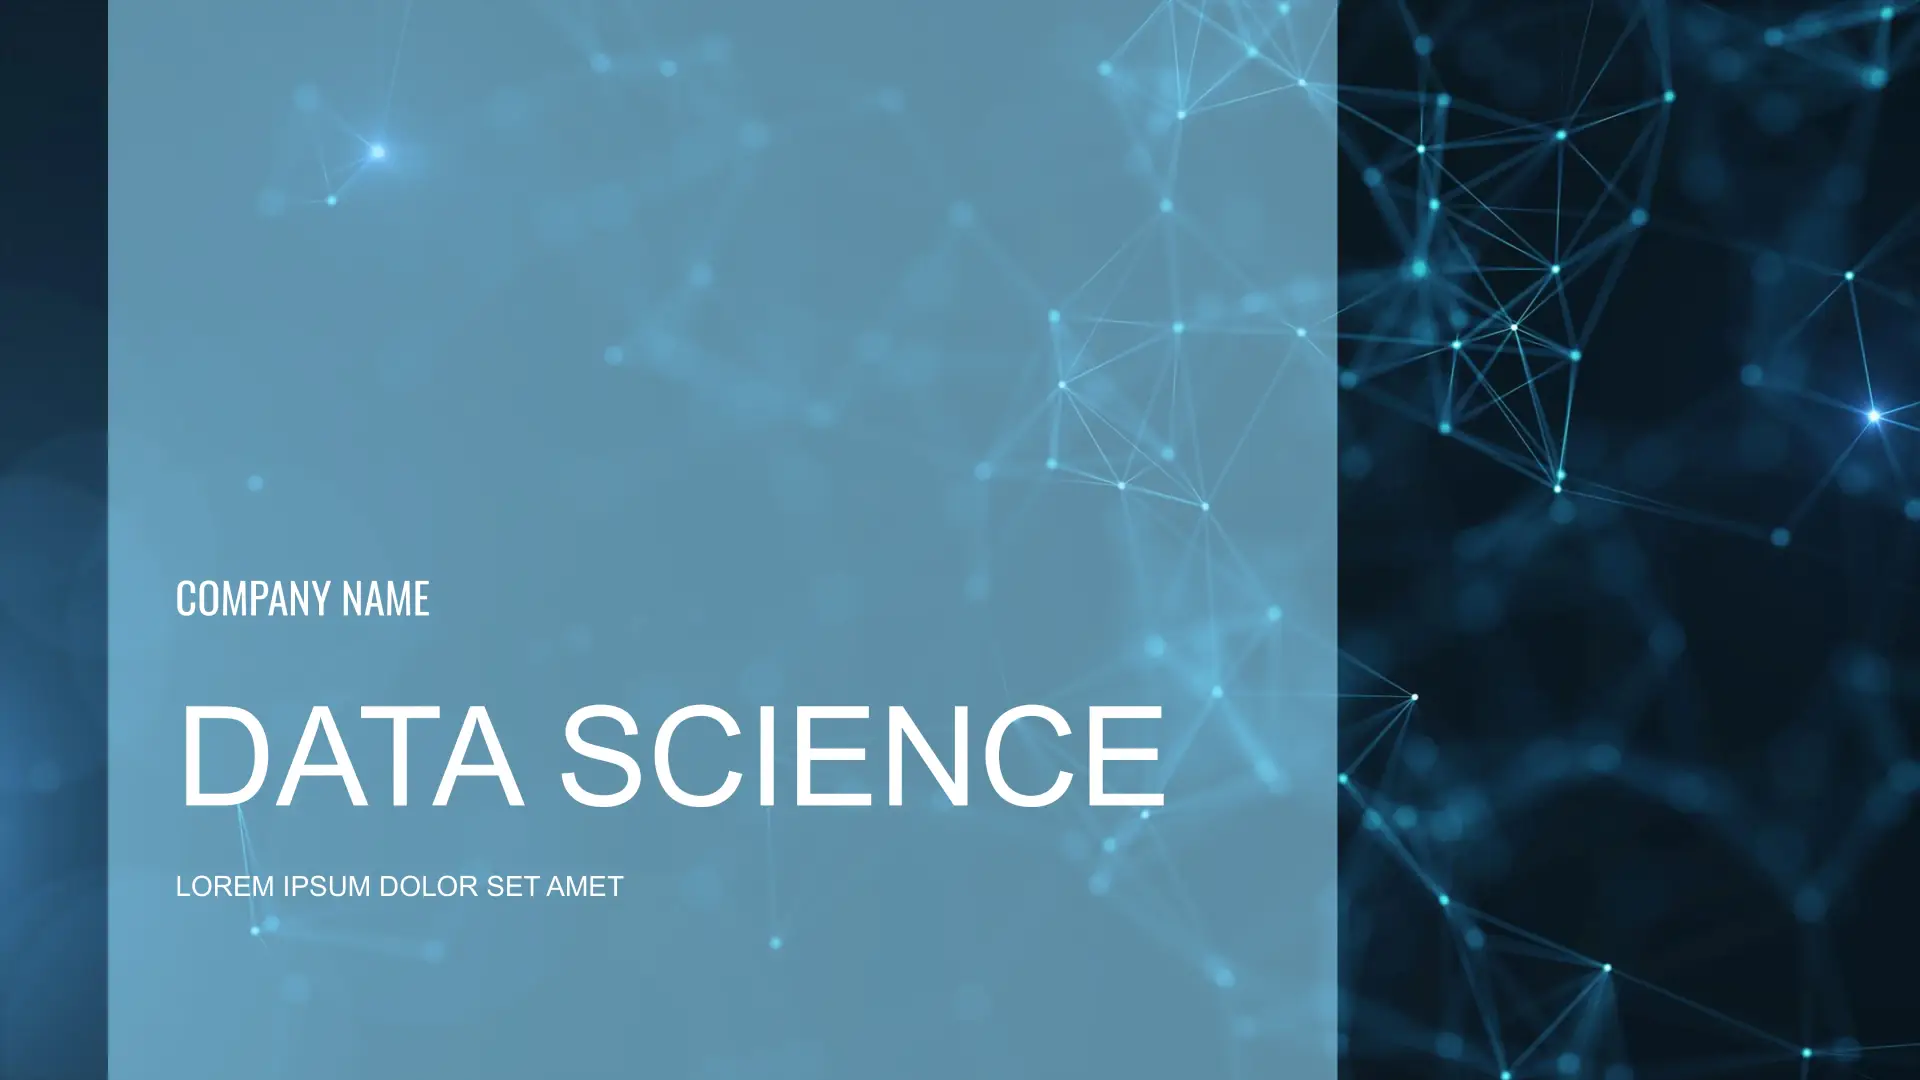 Data Science Template for Google Slides